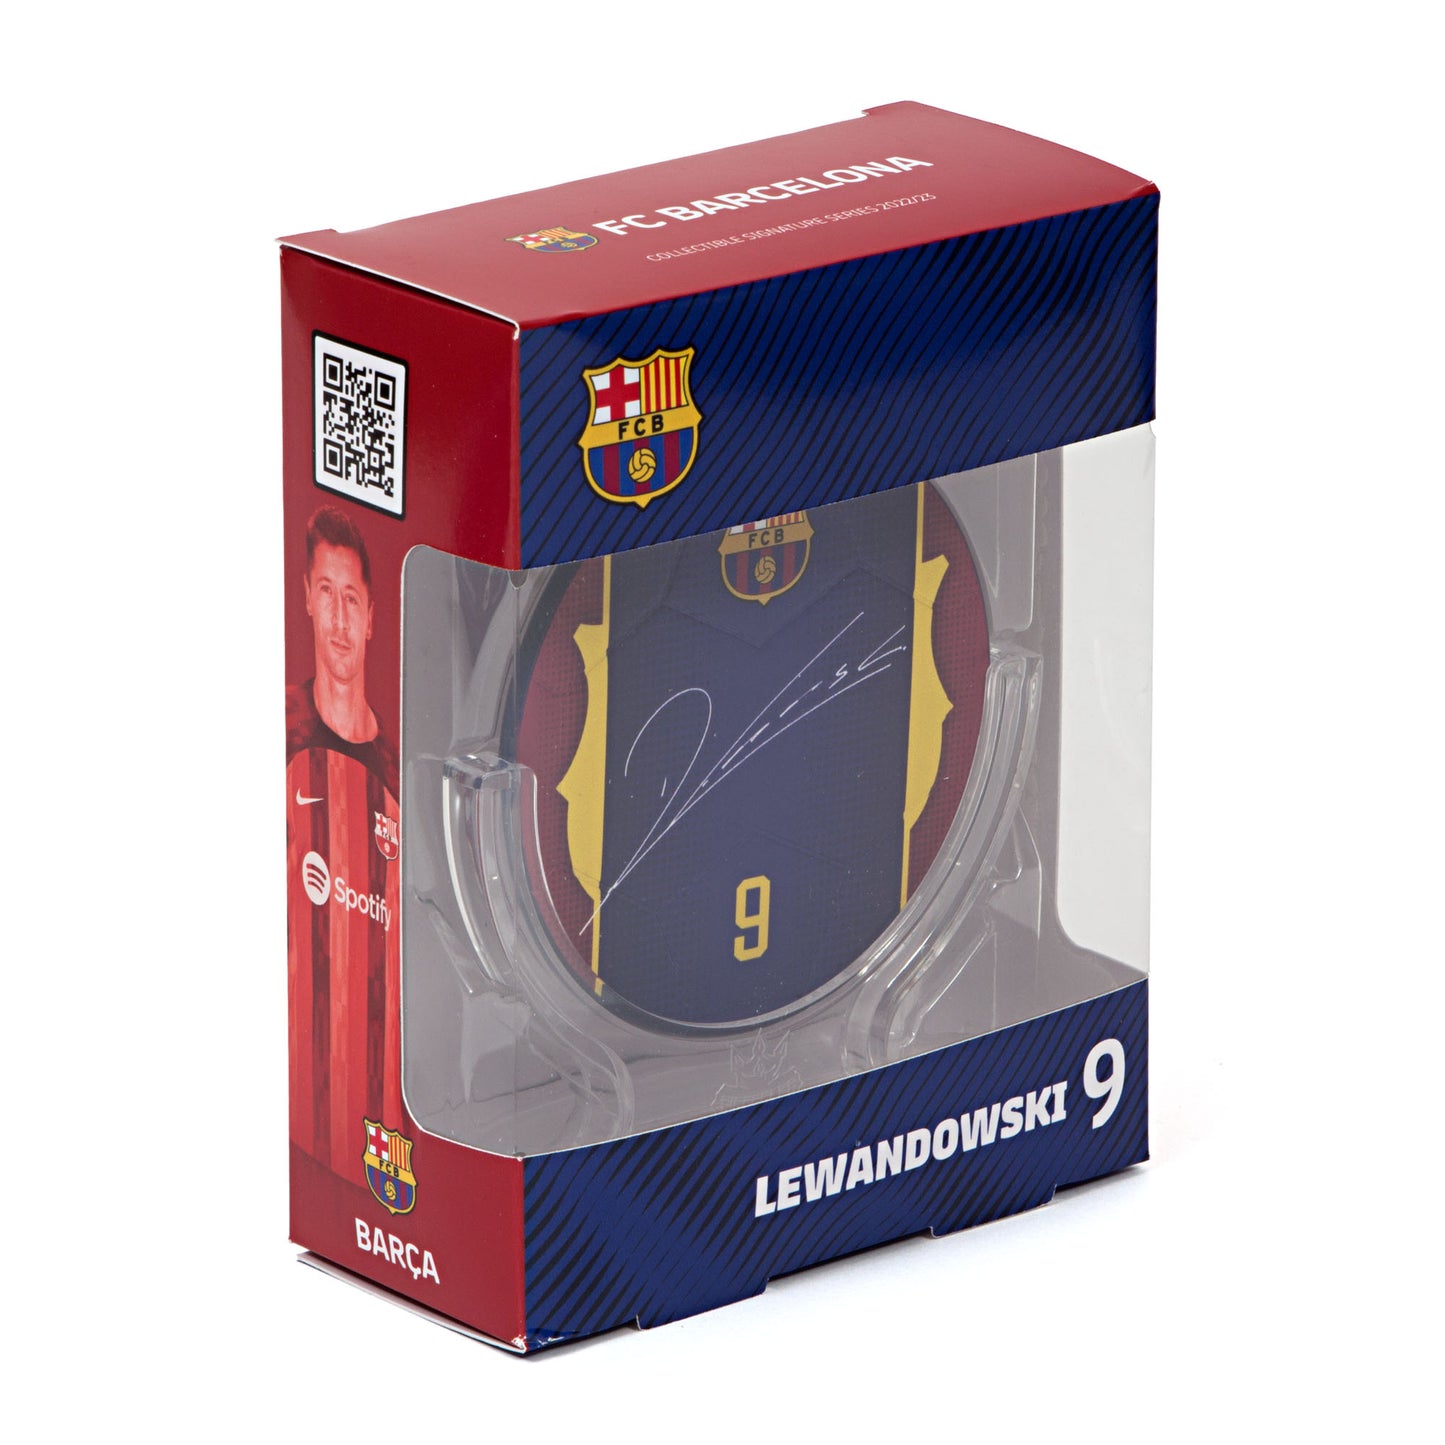 Lewandowski - Barcelona Signables Collectible